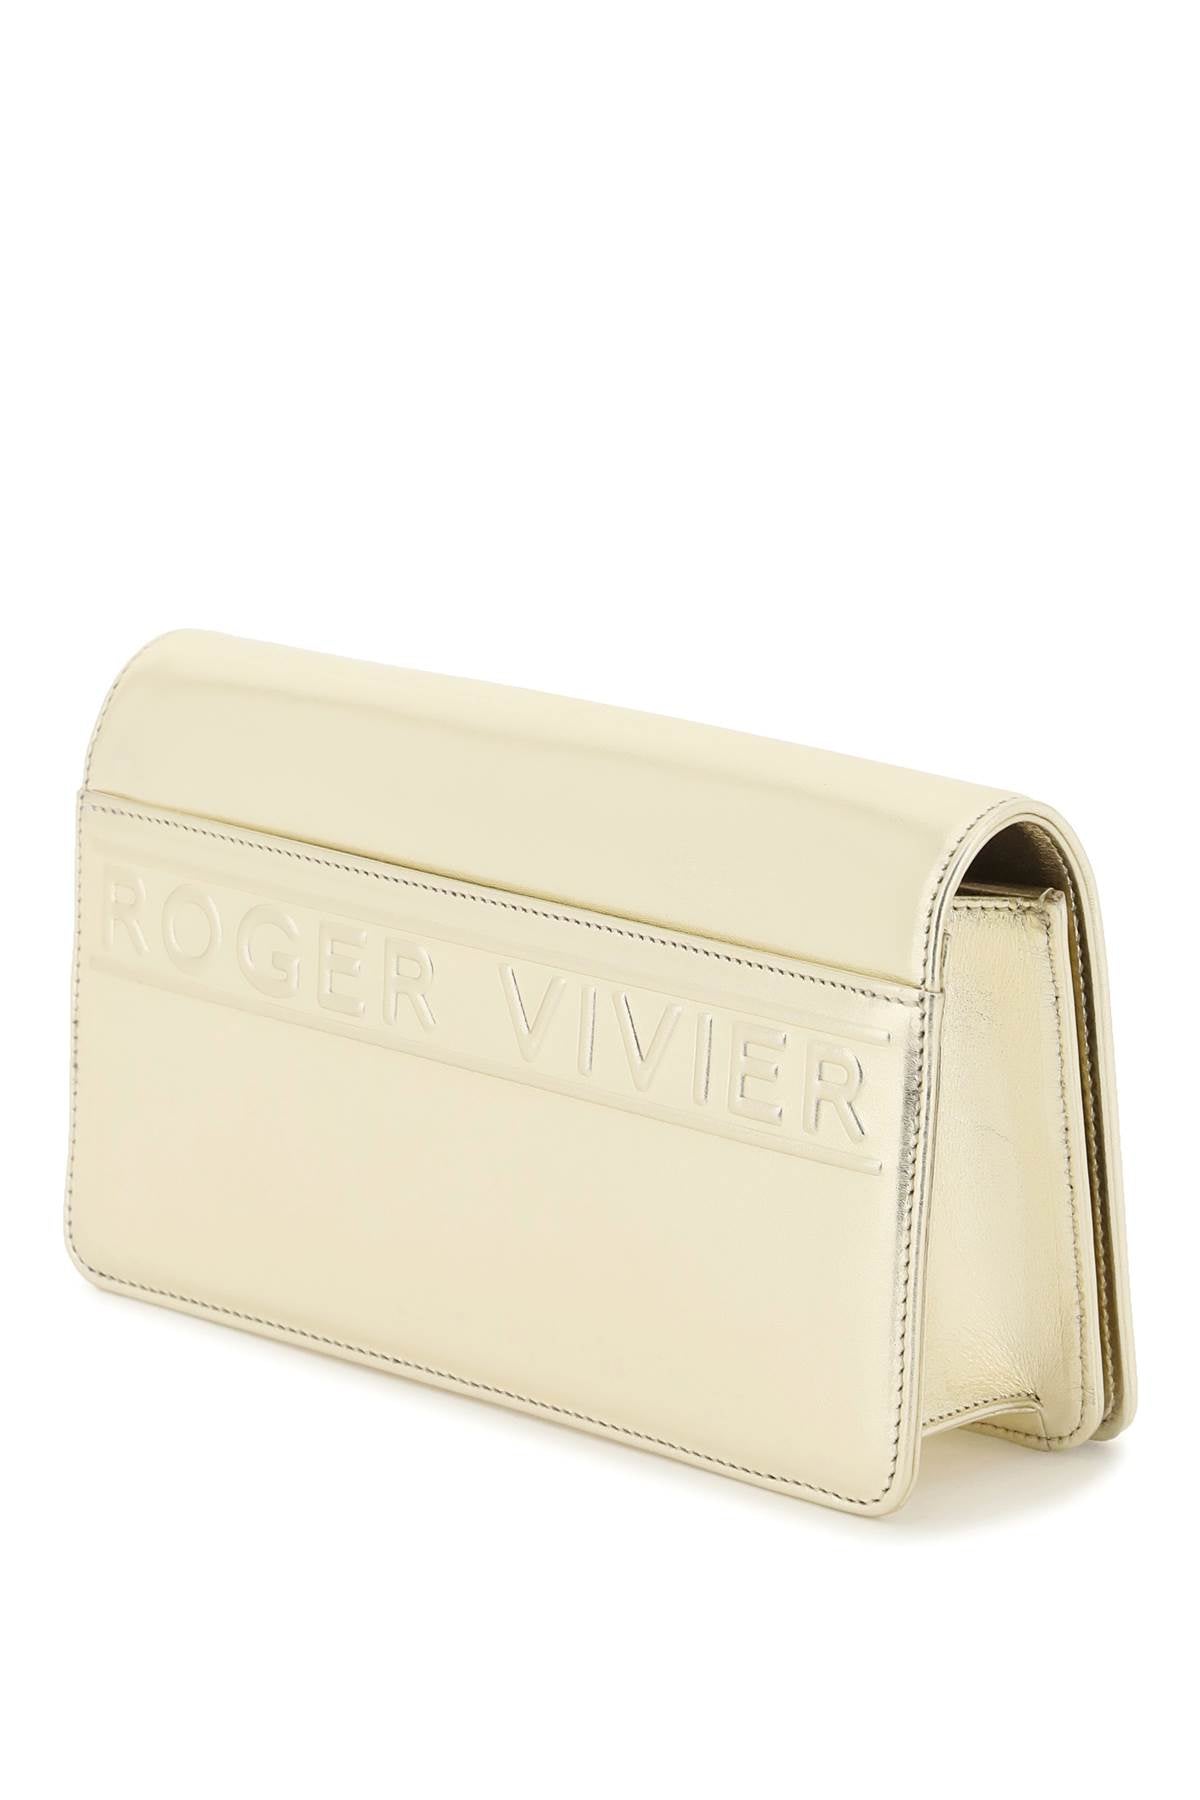 Roger Vivier Roger vivier mini viv' choc jewel laminated leather bag